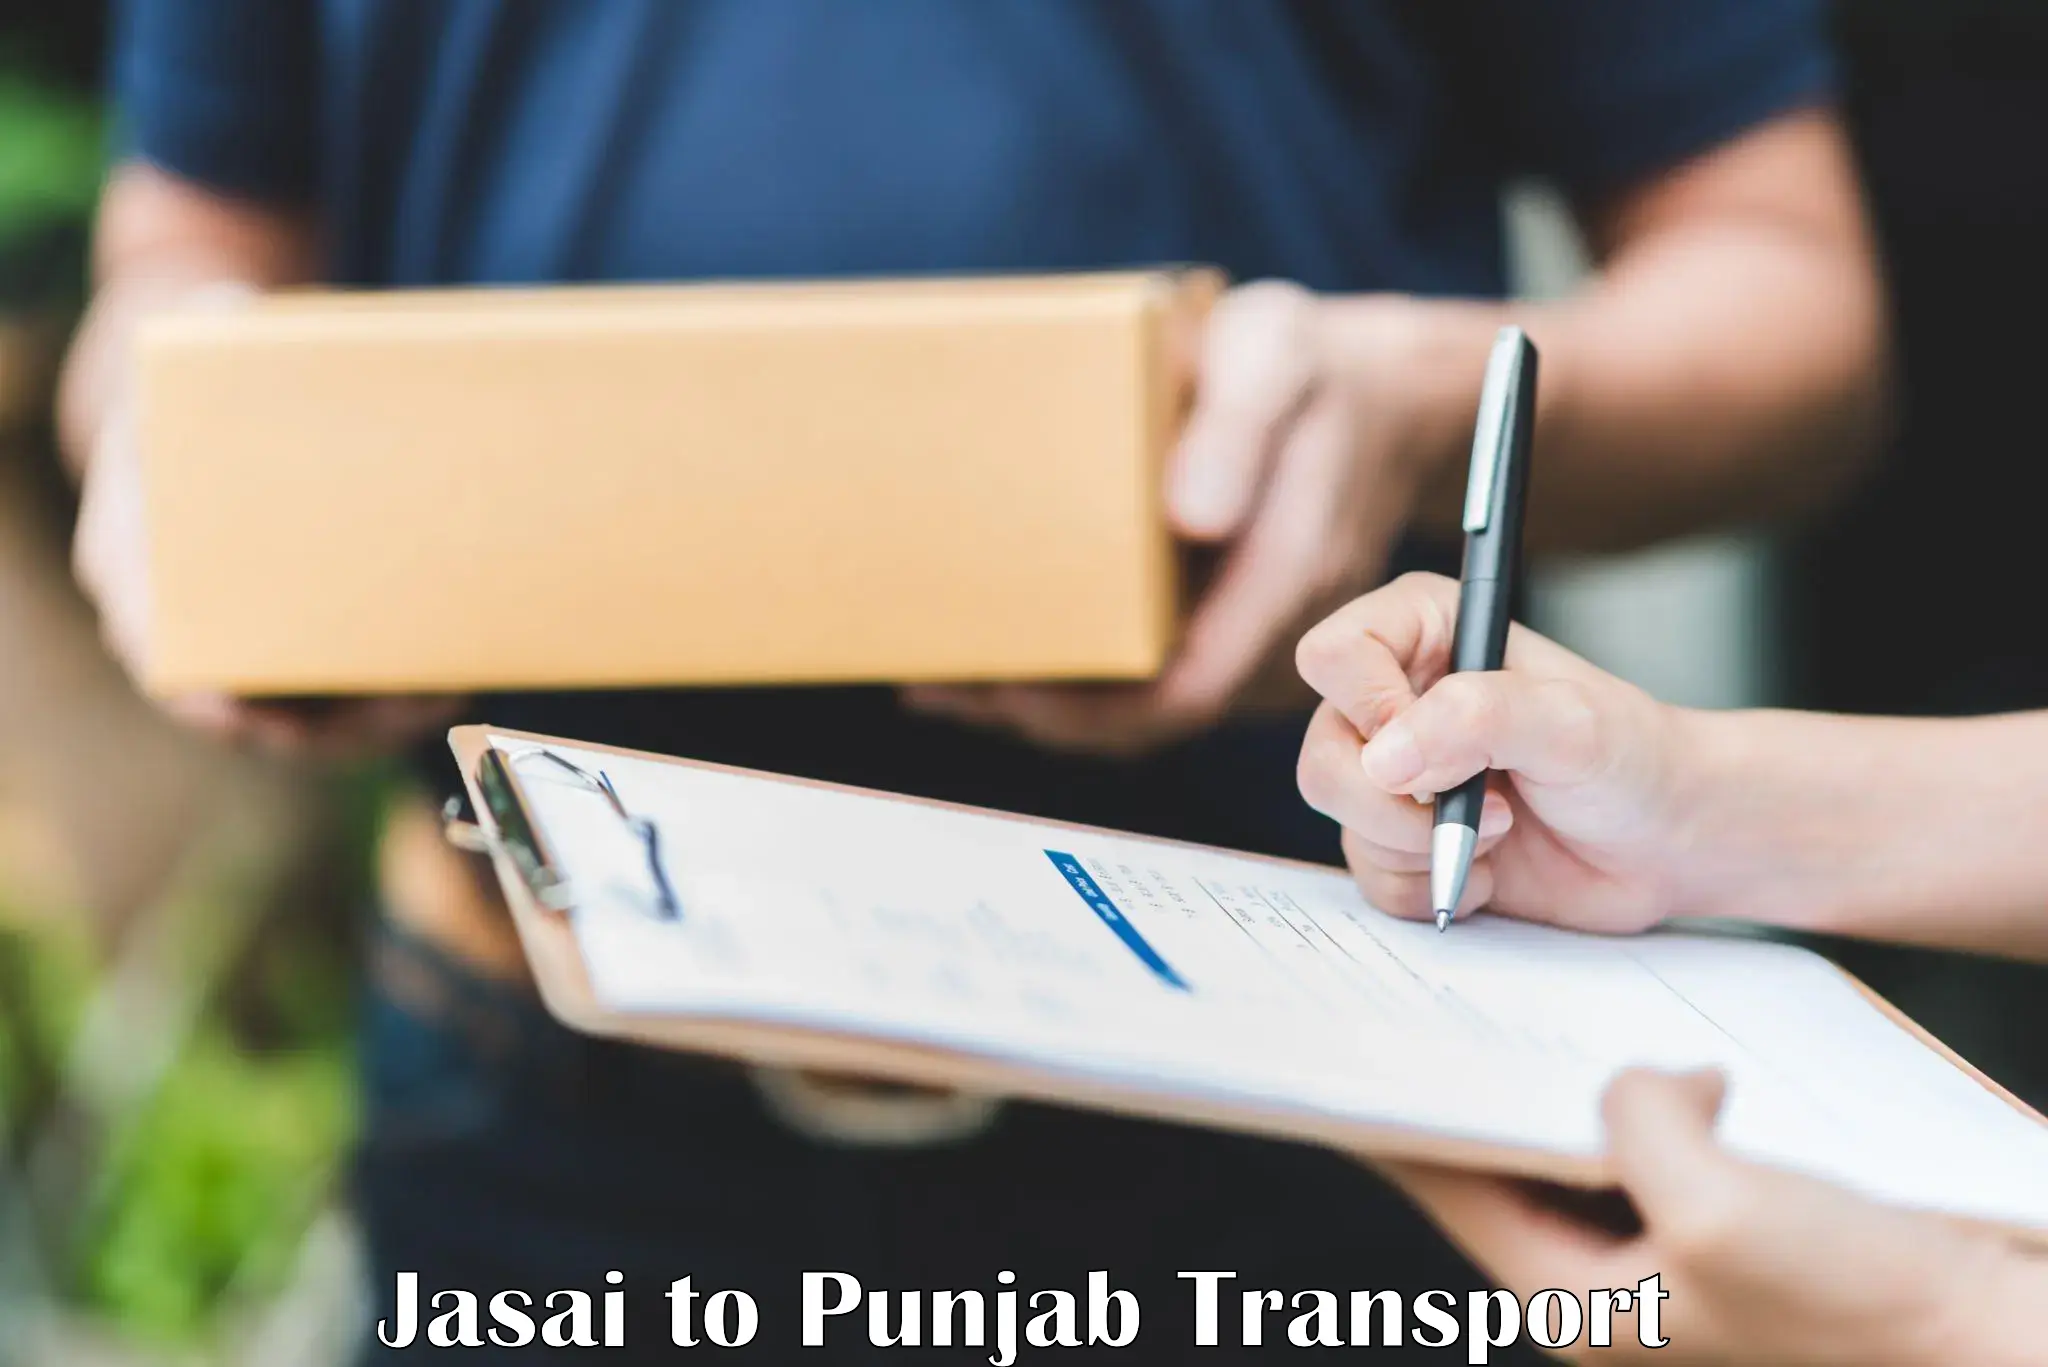 Truck transport companies in India Jasai to Punjab